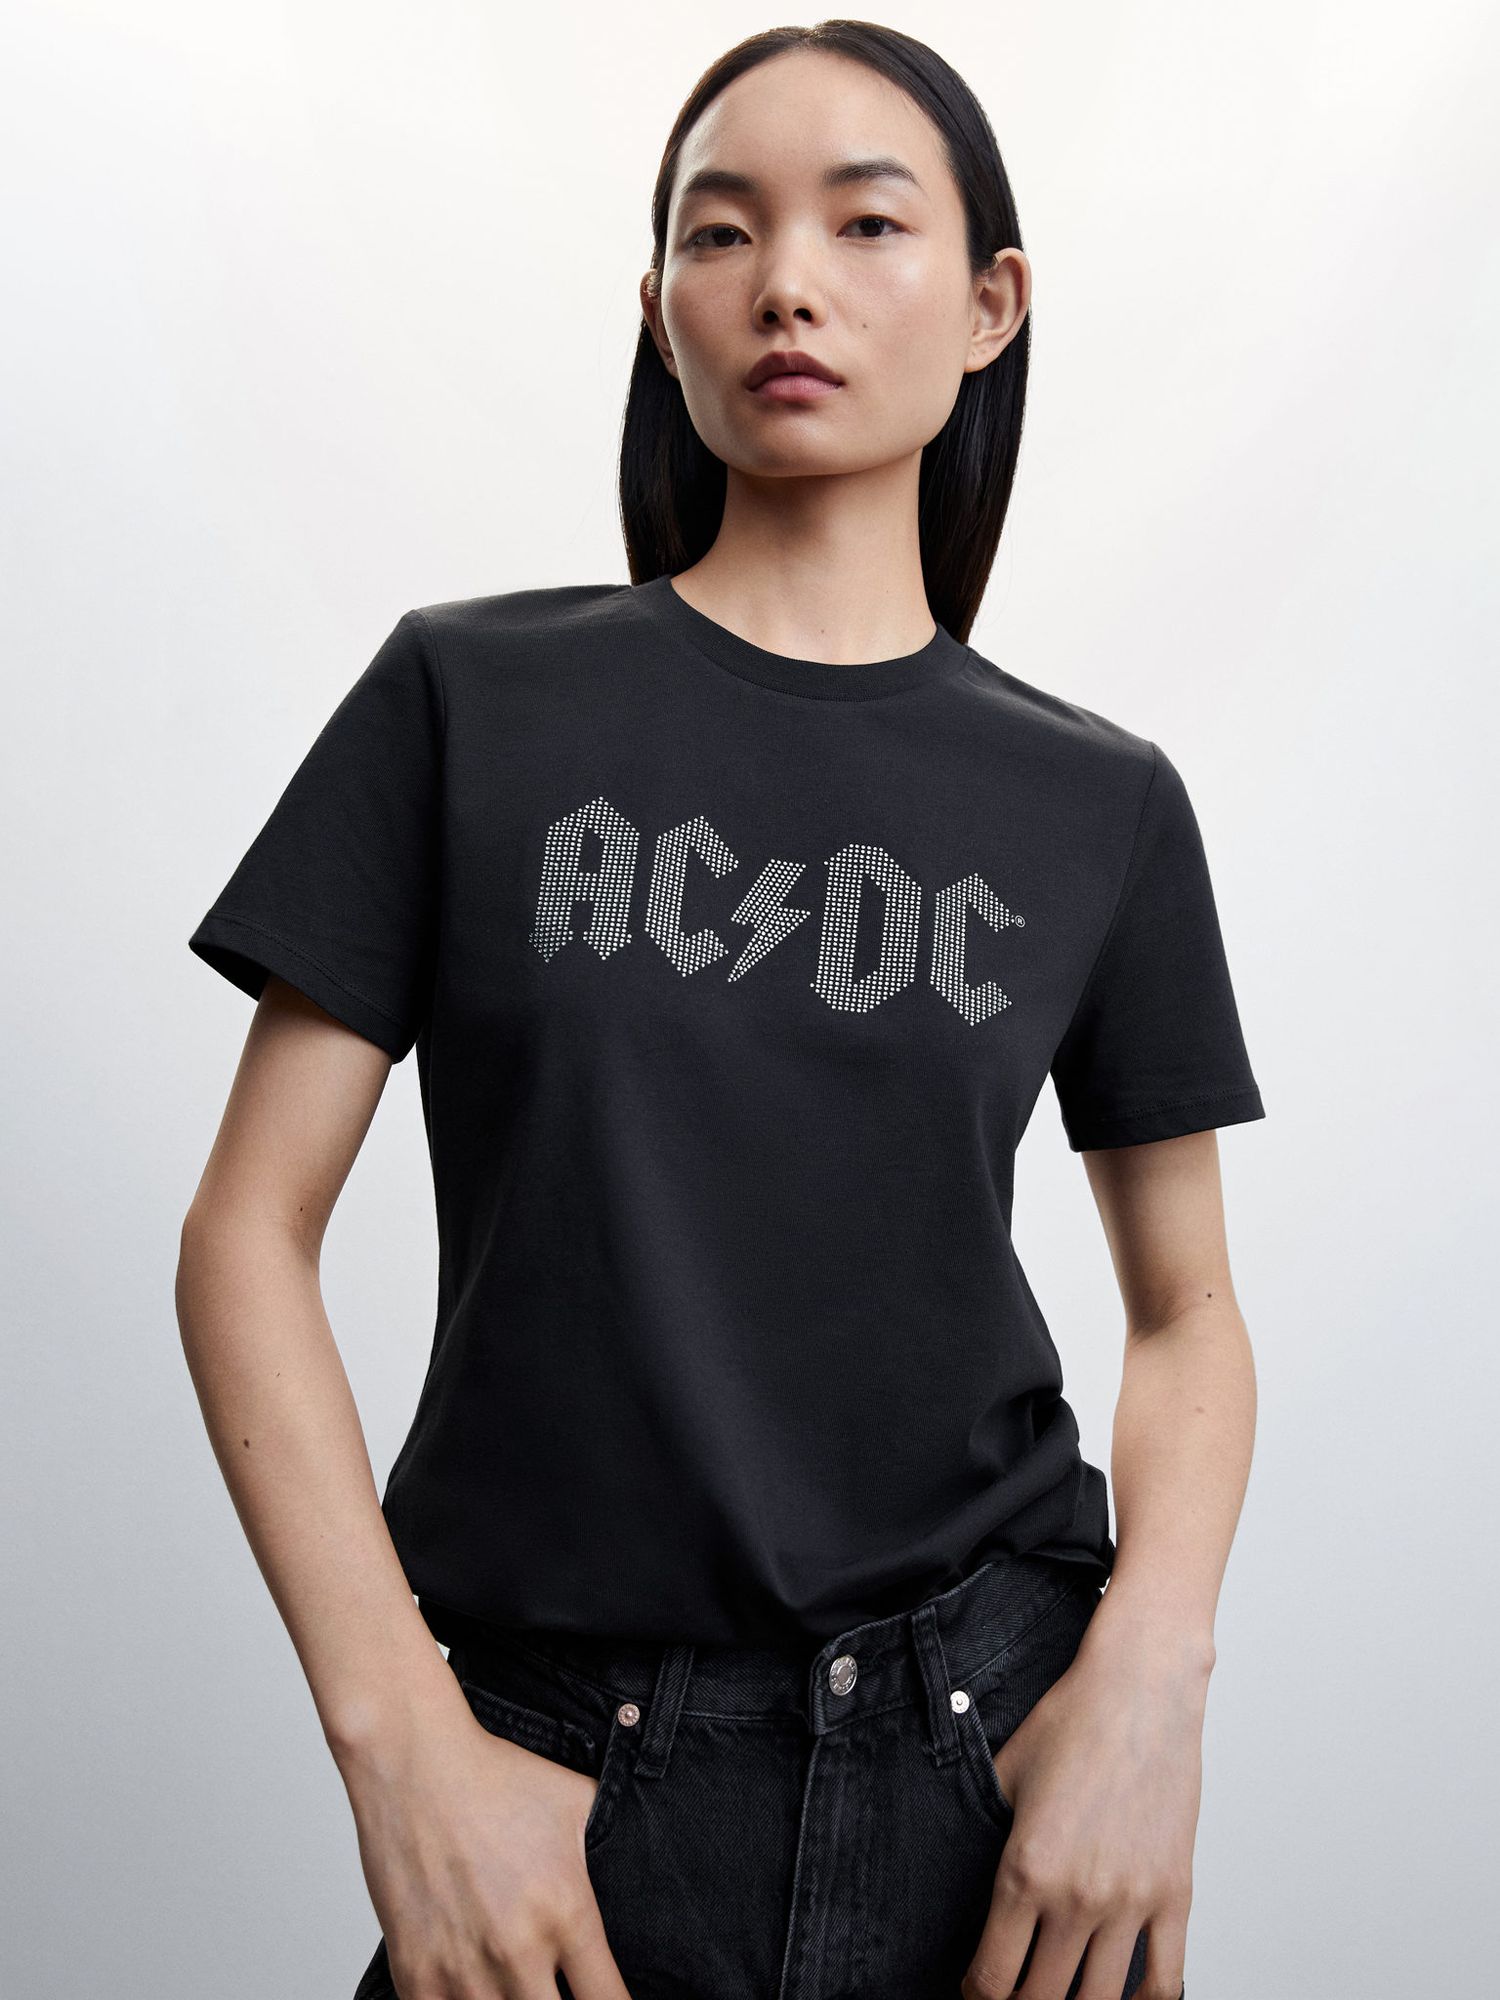 Mango AC/DC T-Shirt, Black, XXS